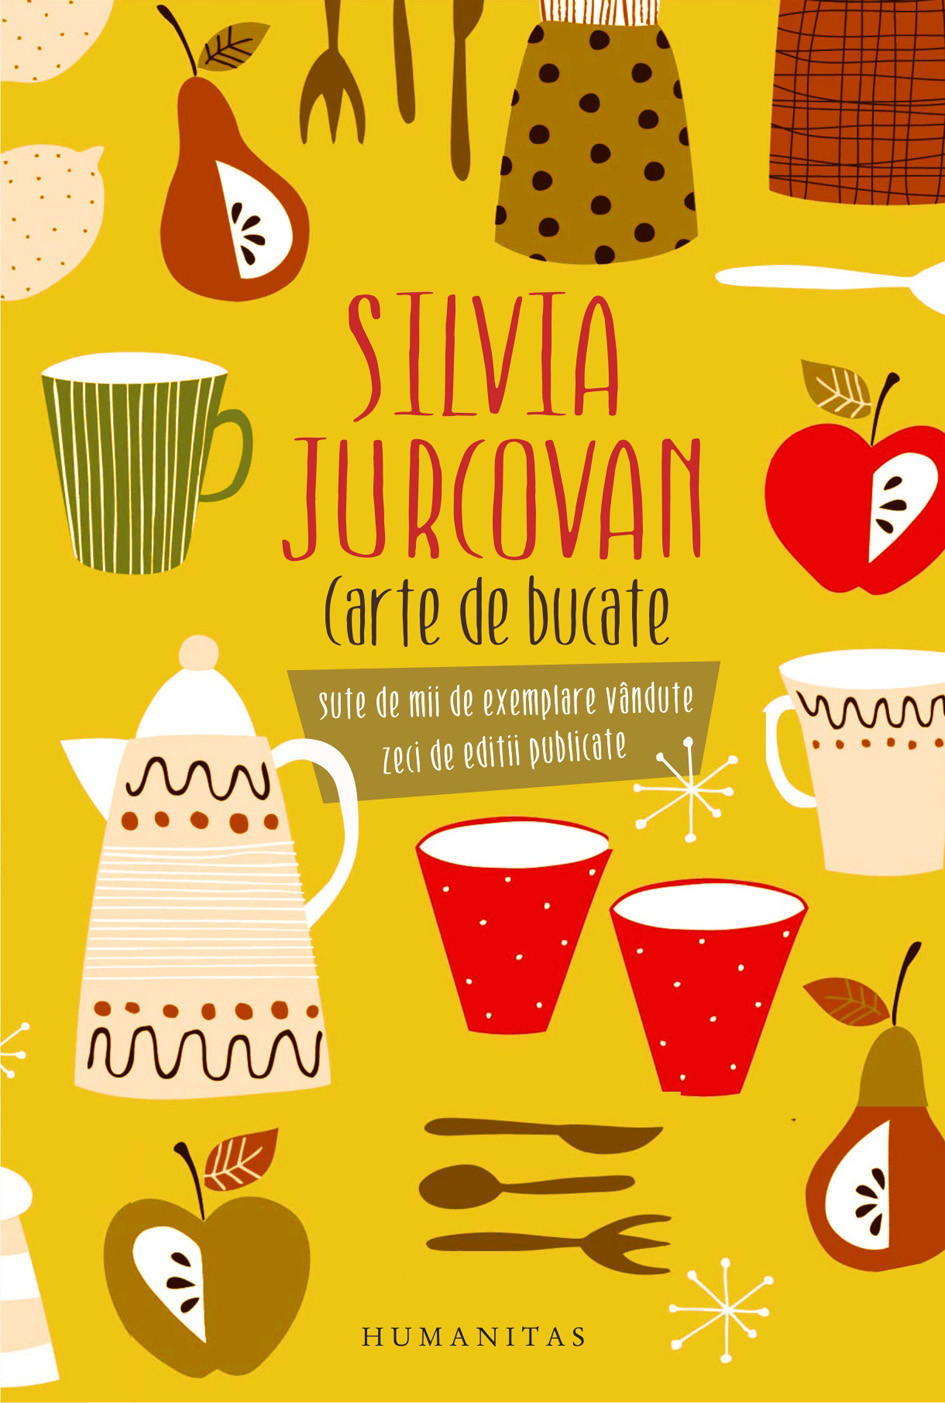 Carte de bucate | Silvia Jurcovan carturesti.ro poza bestsellers.ro